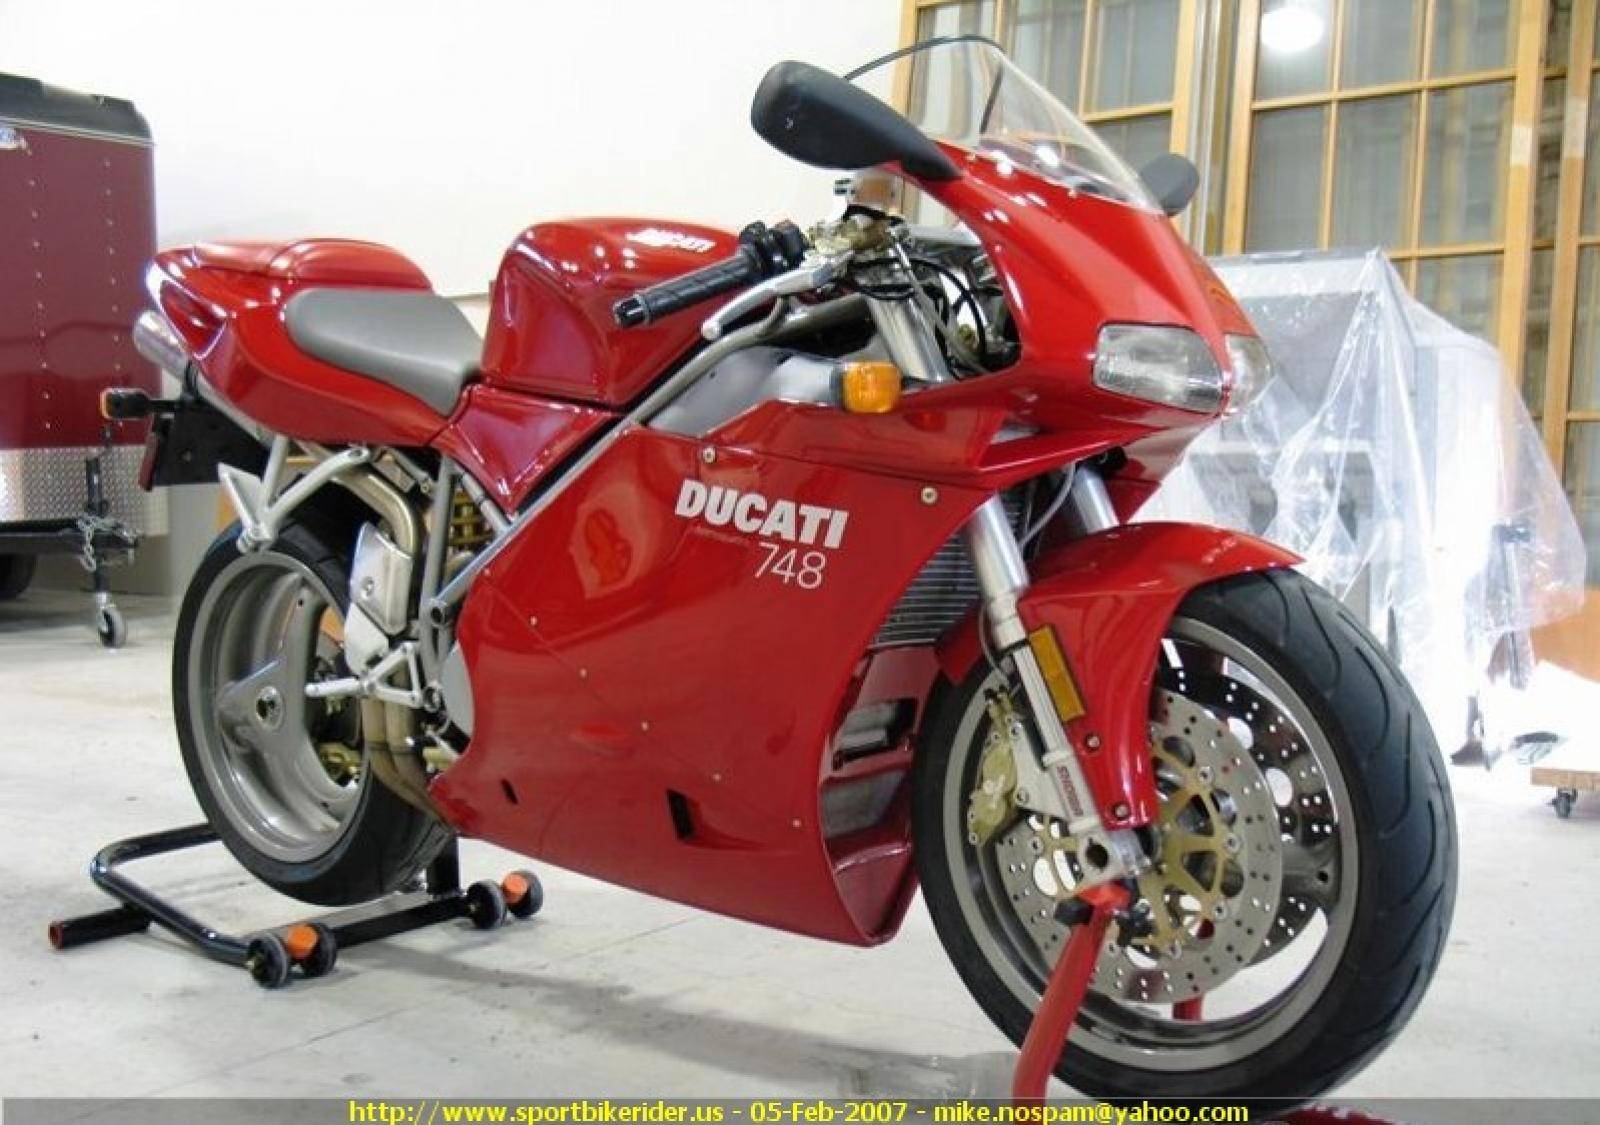 Мотоцикл ducati 1198s corse special edition 2010 фото, характеристики, обзор, сравнение на базамото